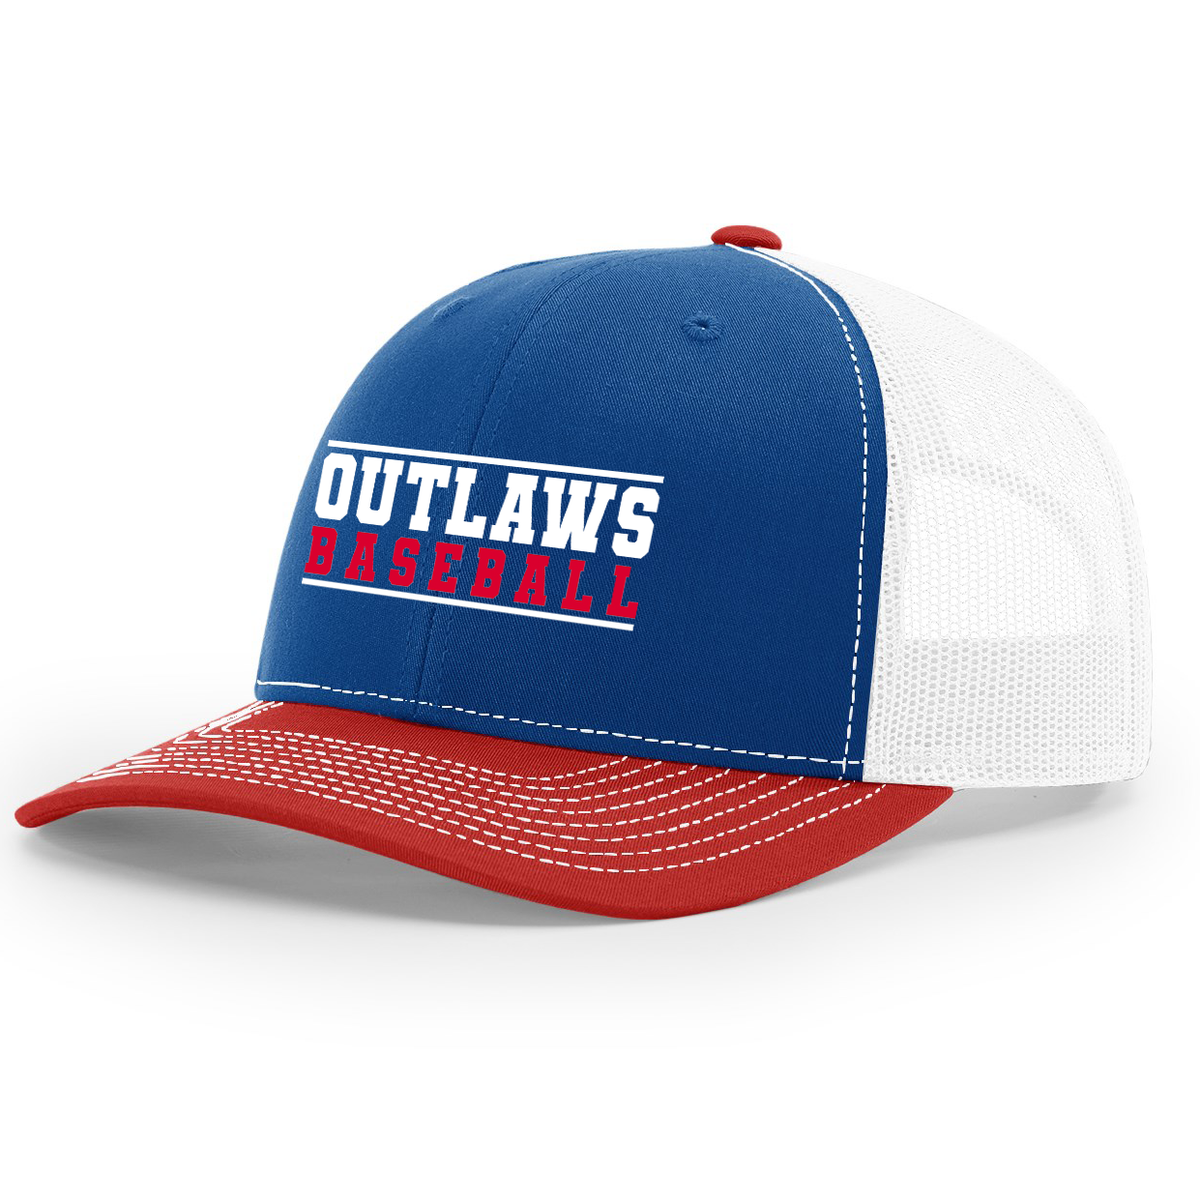 Southern Indiana Outlaws Baseball Snapback Trucker Cap